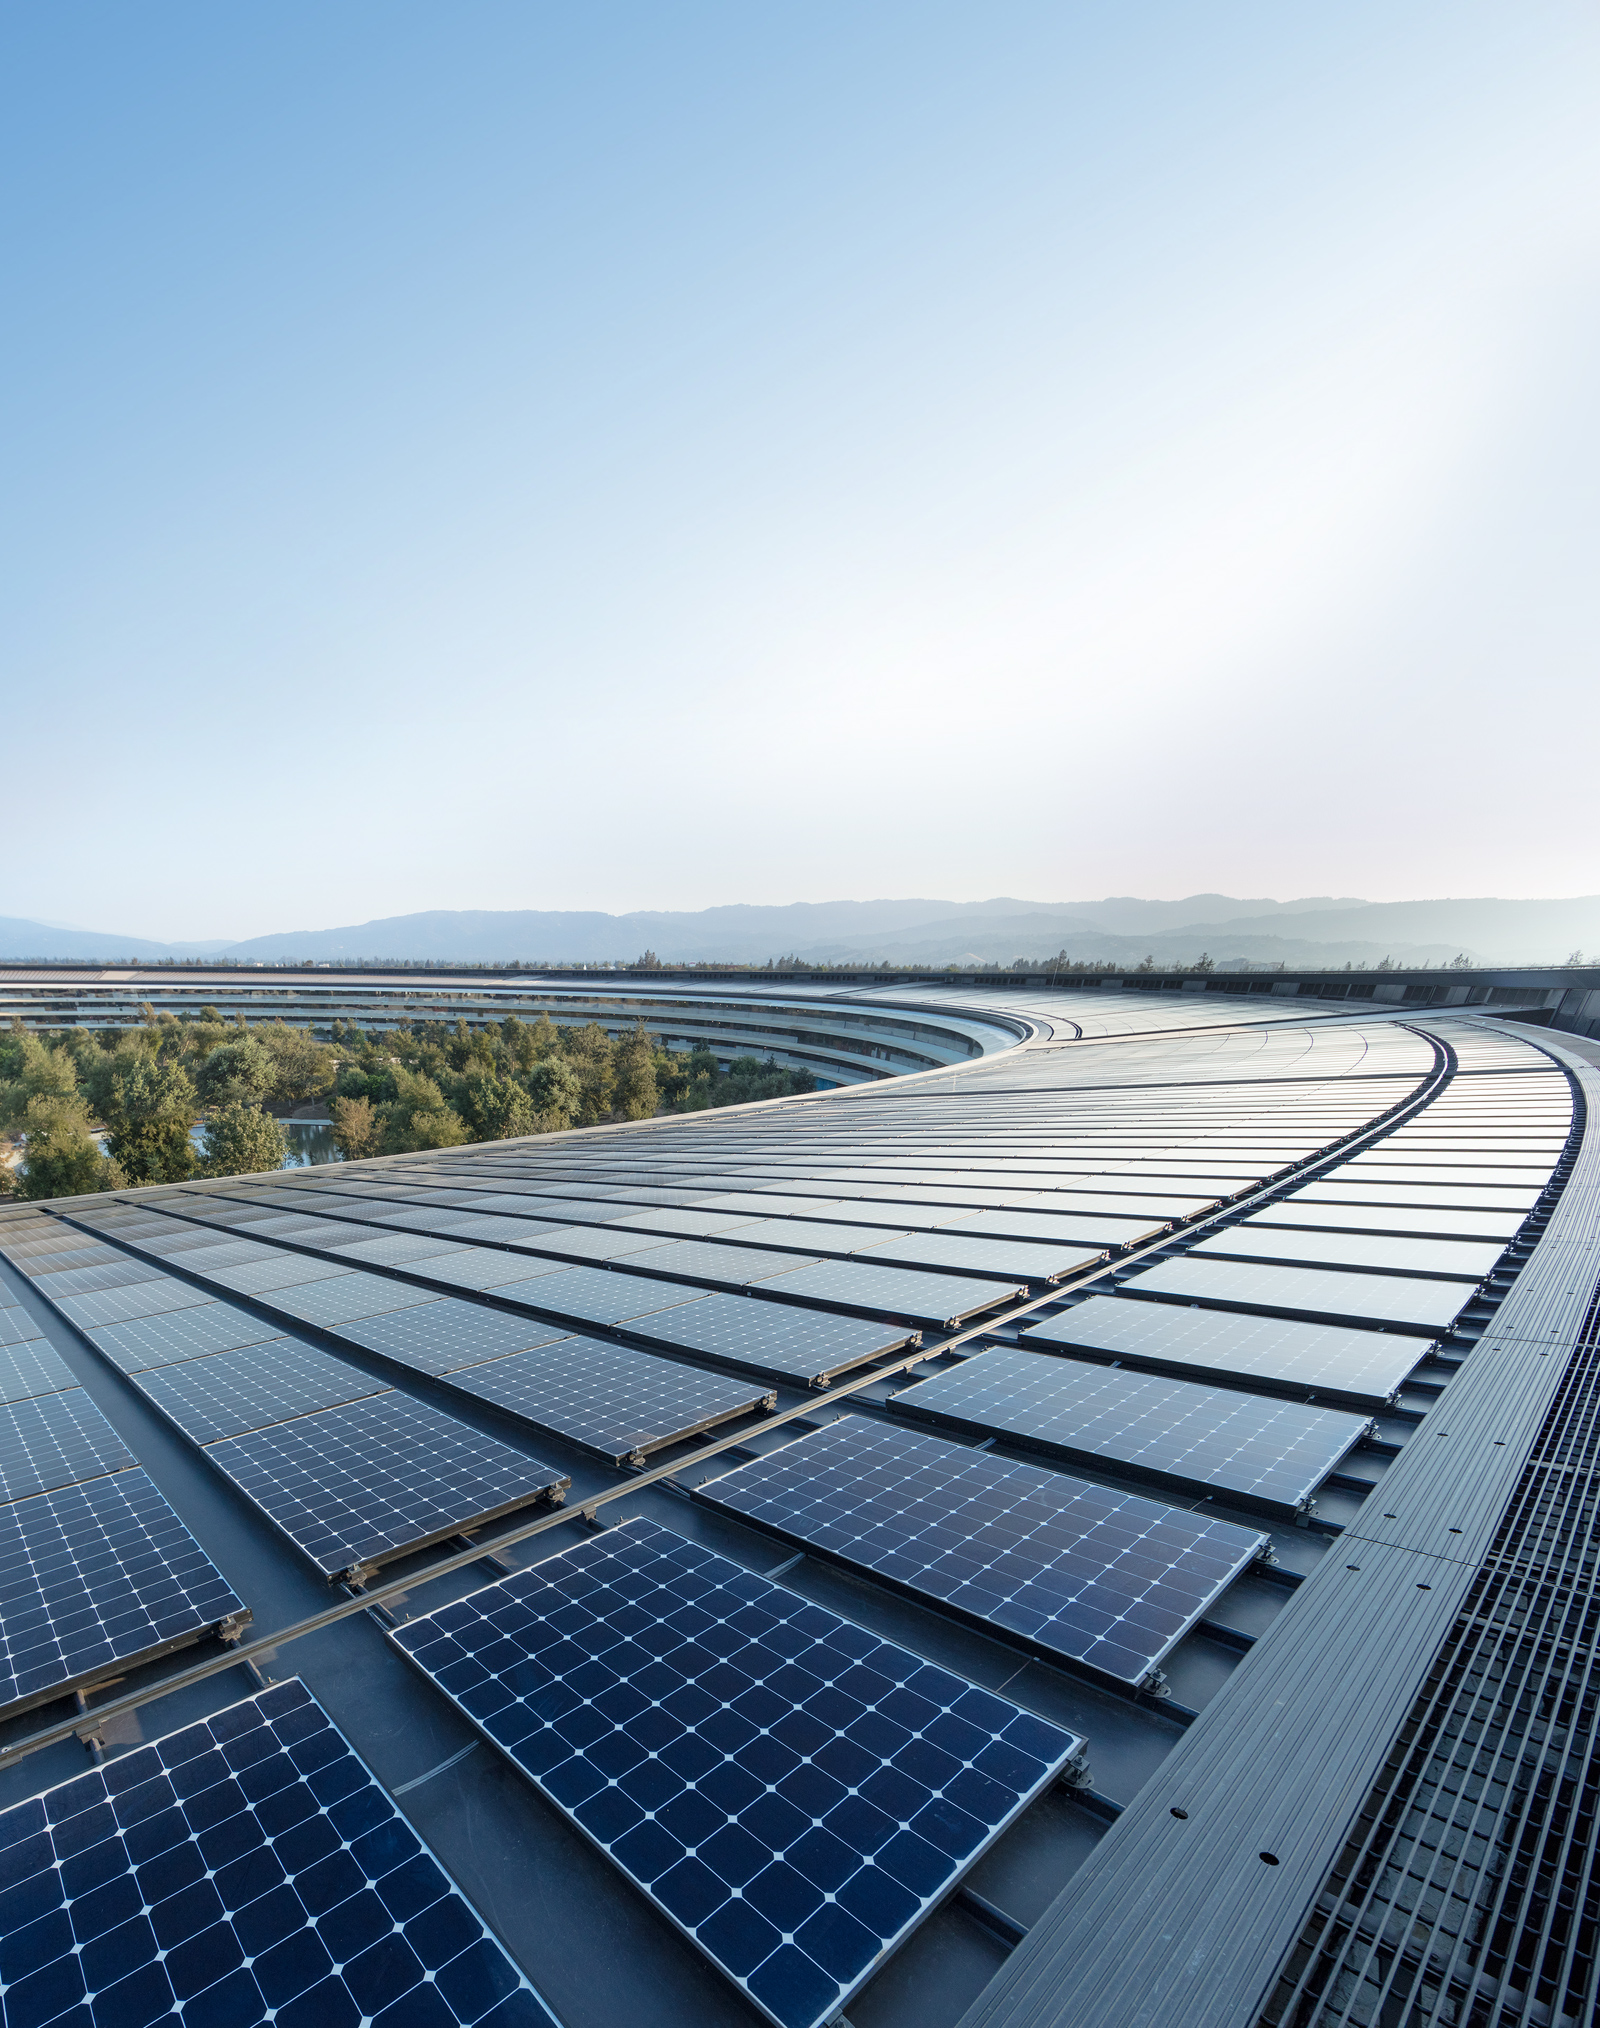 Apple Park 屋顶安装的太阳能，让该建筑可 100% 利用可再生能源供电